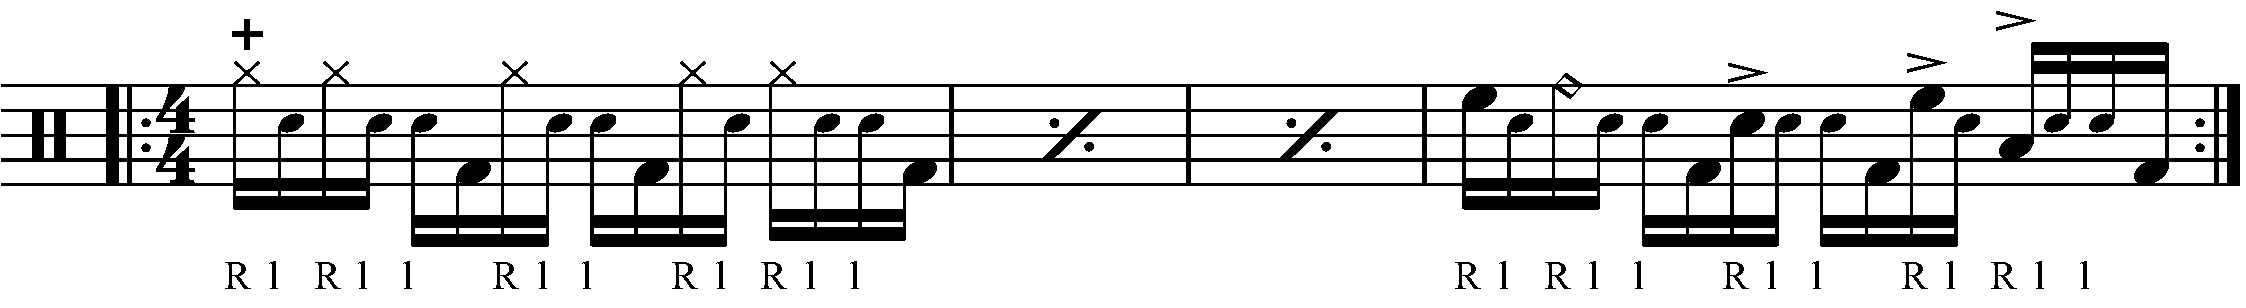 A four bar phrase built around a lienar RLLF pattern